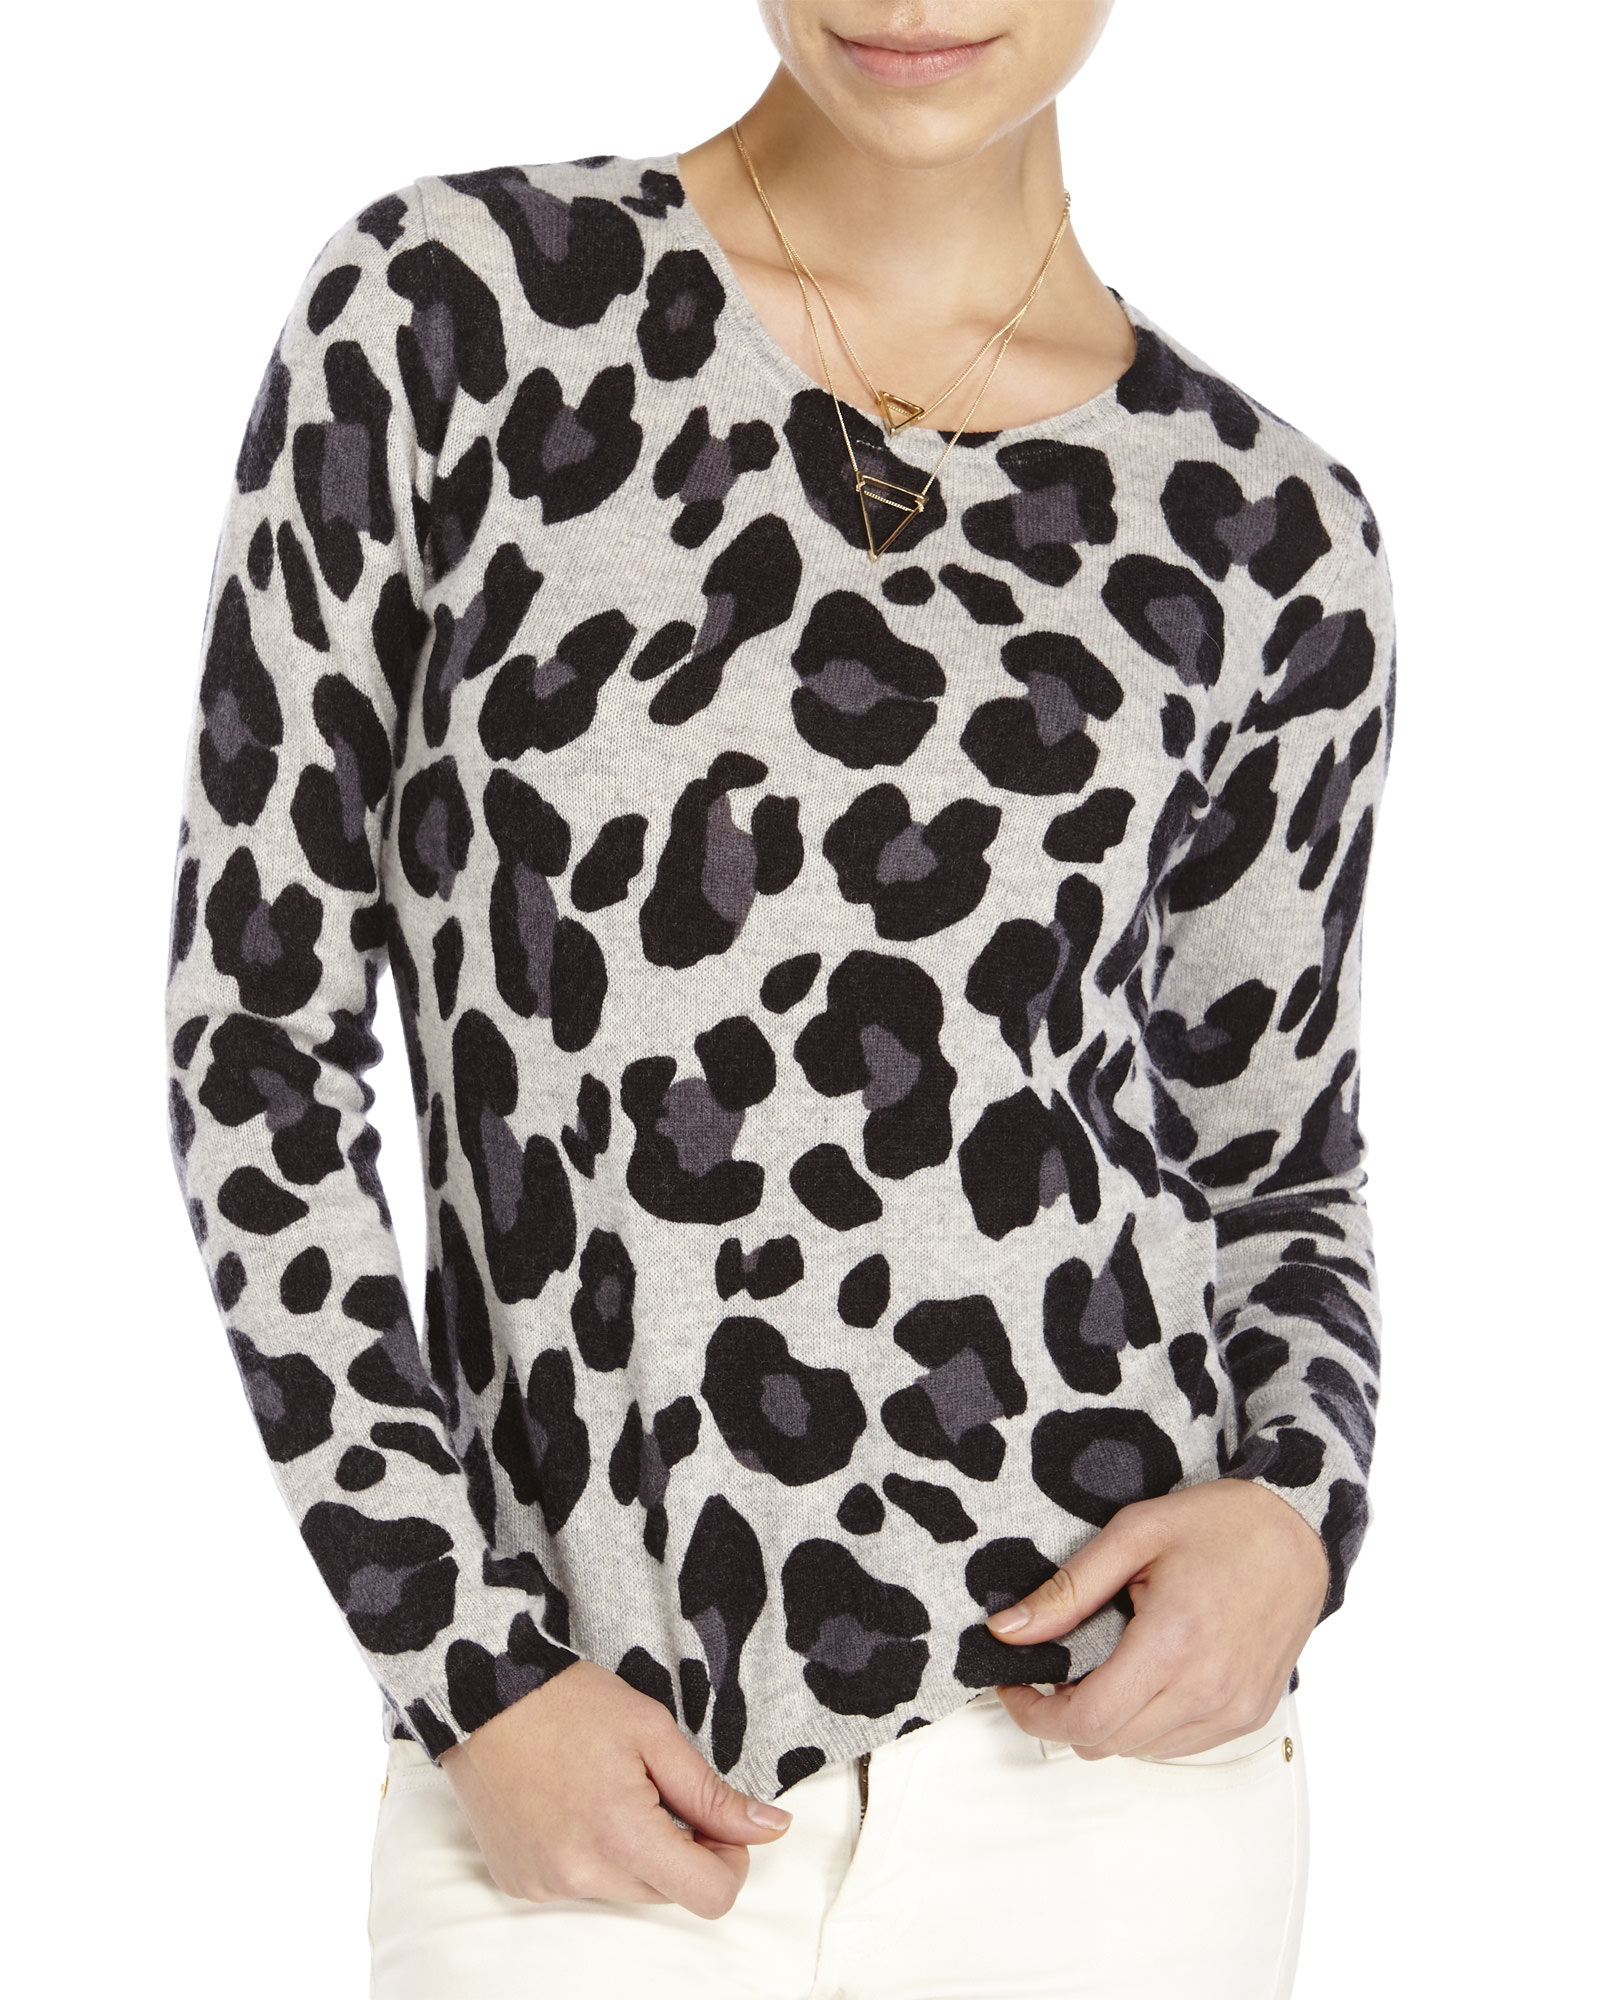 Lauren hansen Leopard Print Cashmere Sweater in Gray | Lyst